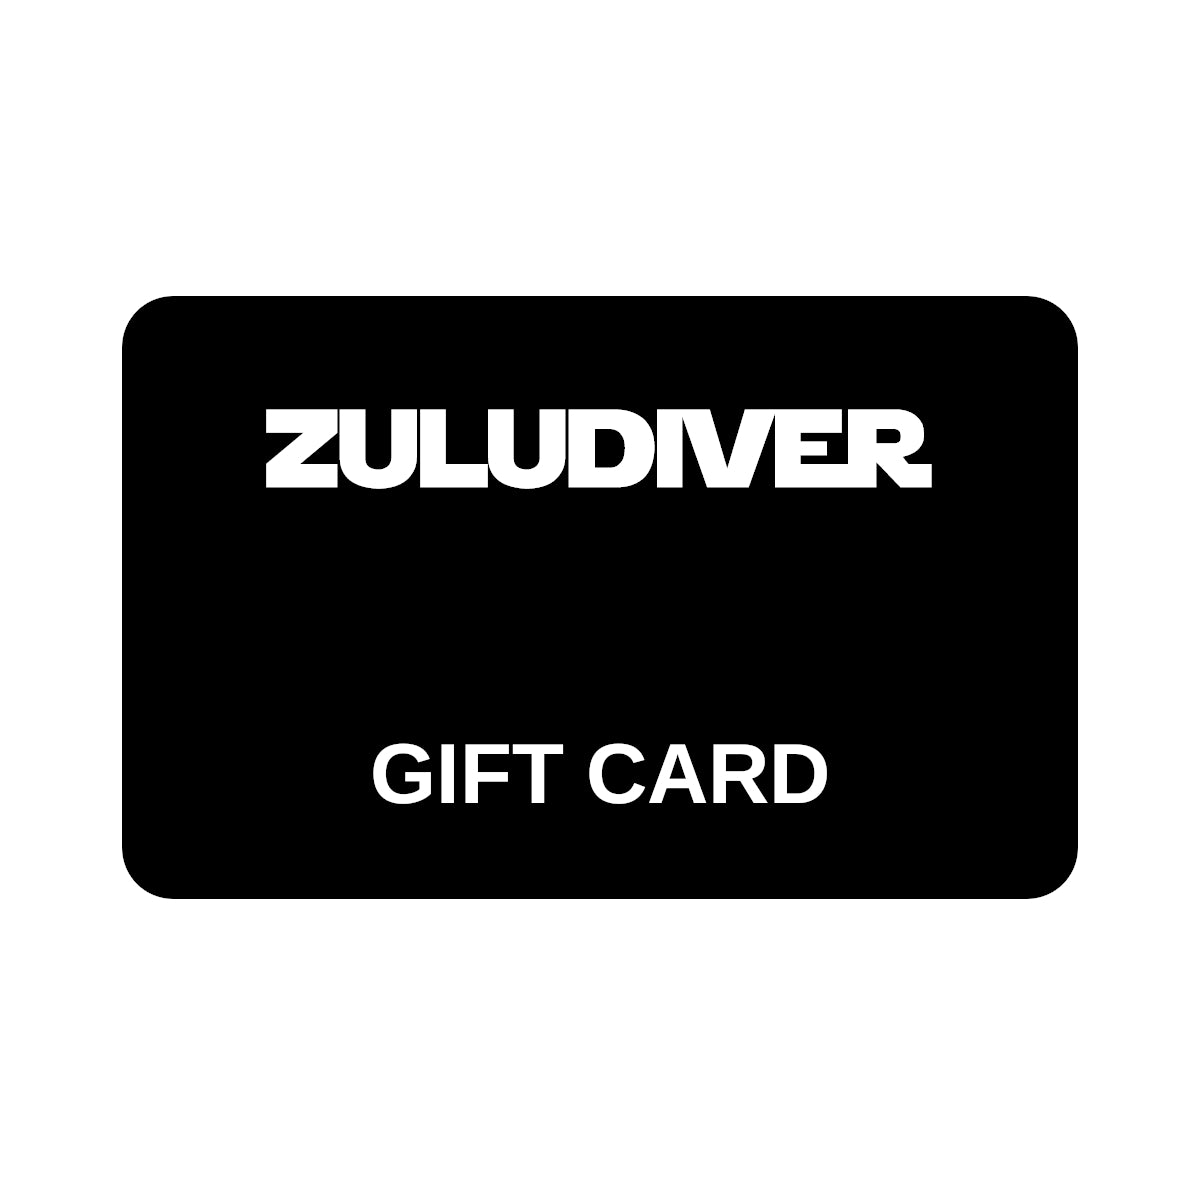 ZULUDIVER Gift Card